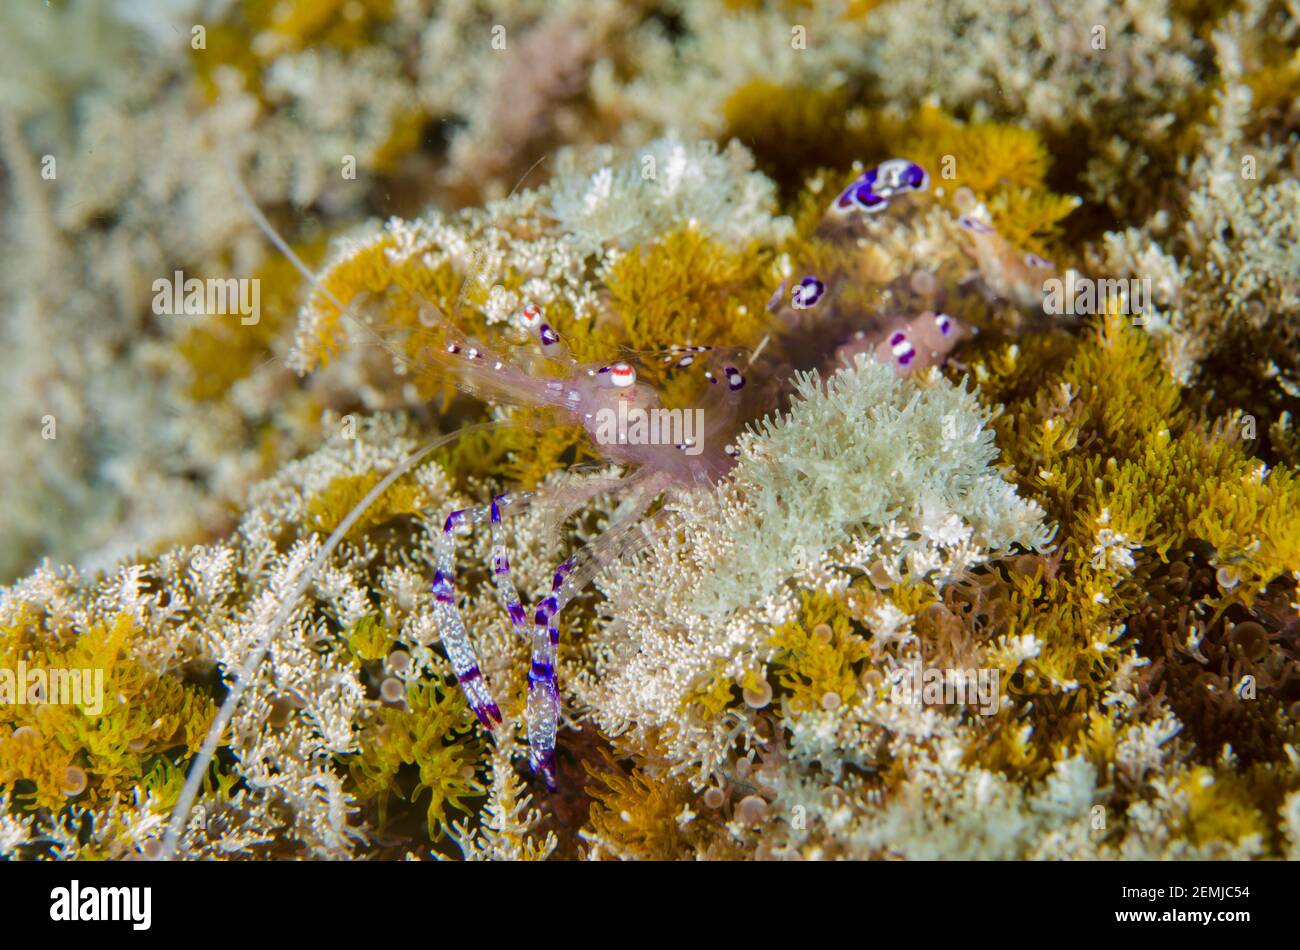 Sarasvati Anemone Shrimp, Ancylomenes sarasvati, in Tree Anemone, Actinodendron arboreum, Deep Reef dive site, Pemuteran, Bali, Indonesia Stock Photo